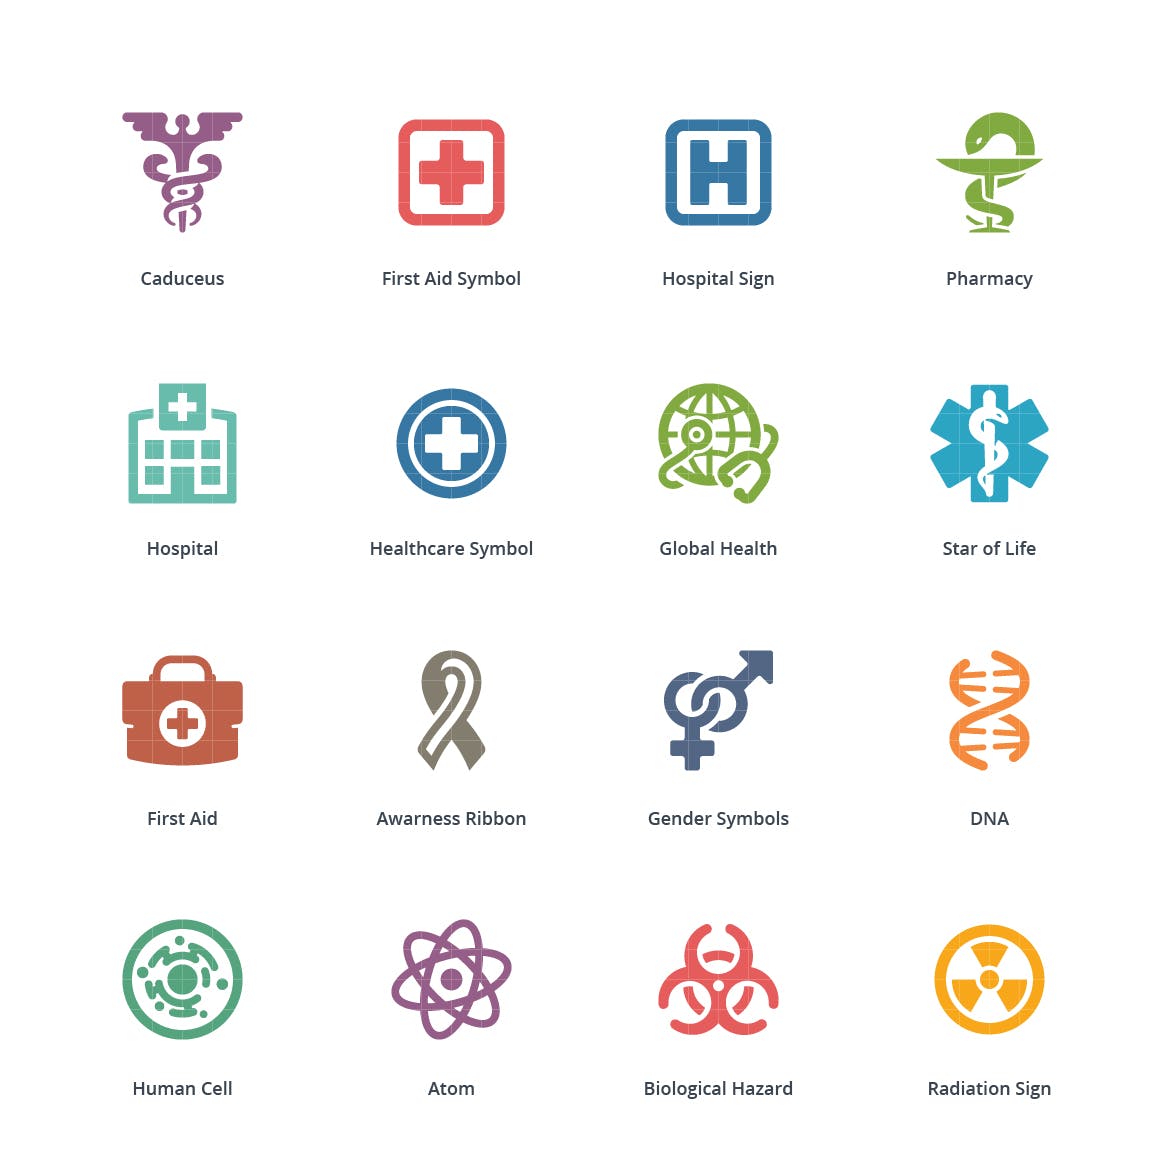 Colored系列-医疗保健主题矢量非凡图库精选图标集v1 Medical & Health Care Icons Set 1 – Colored Series插图(1)